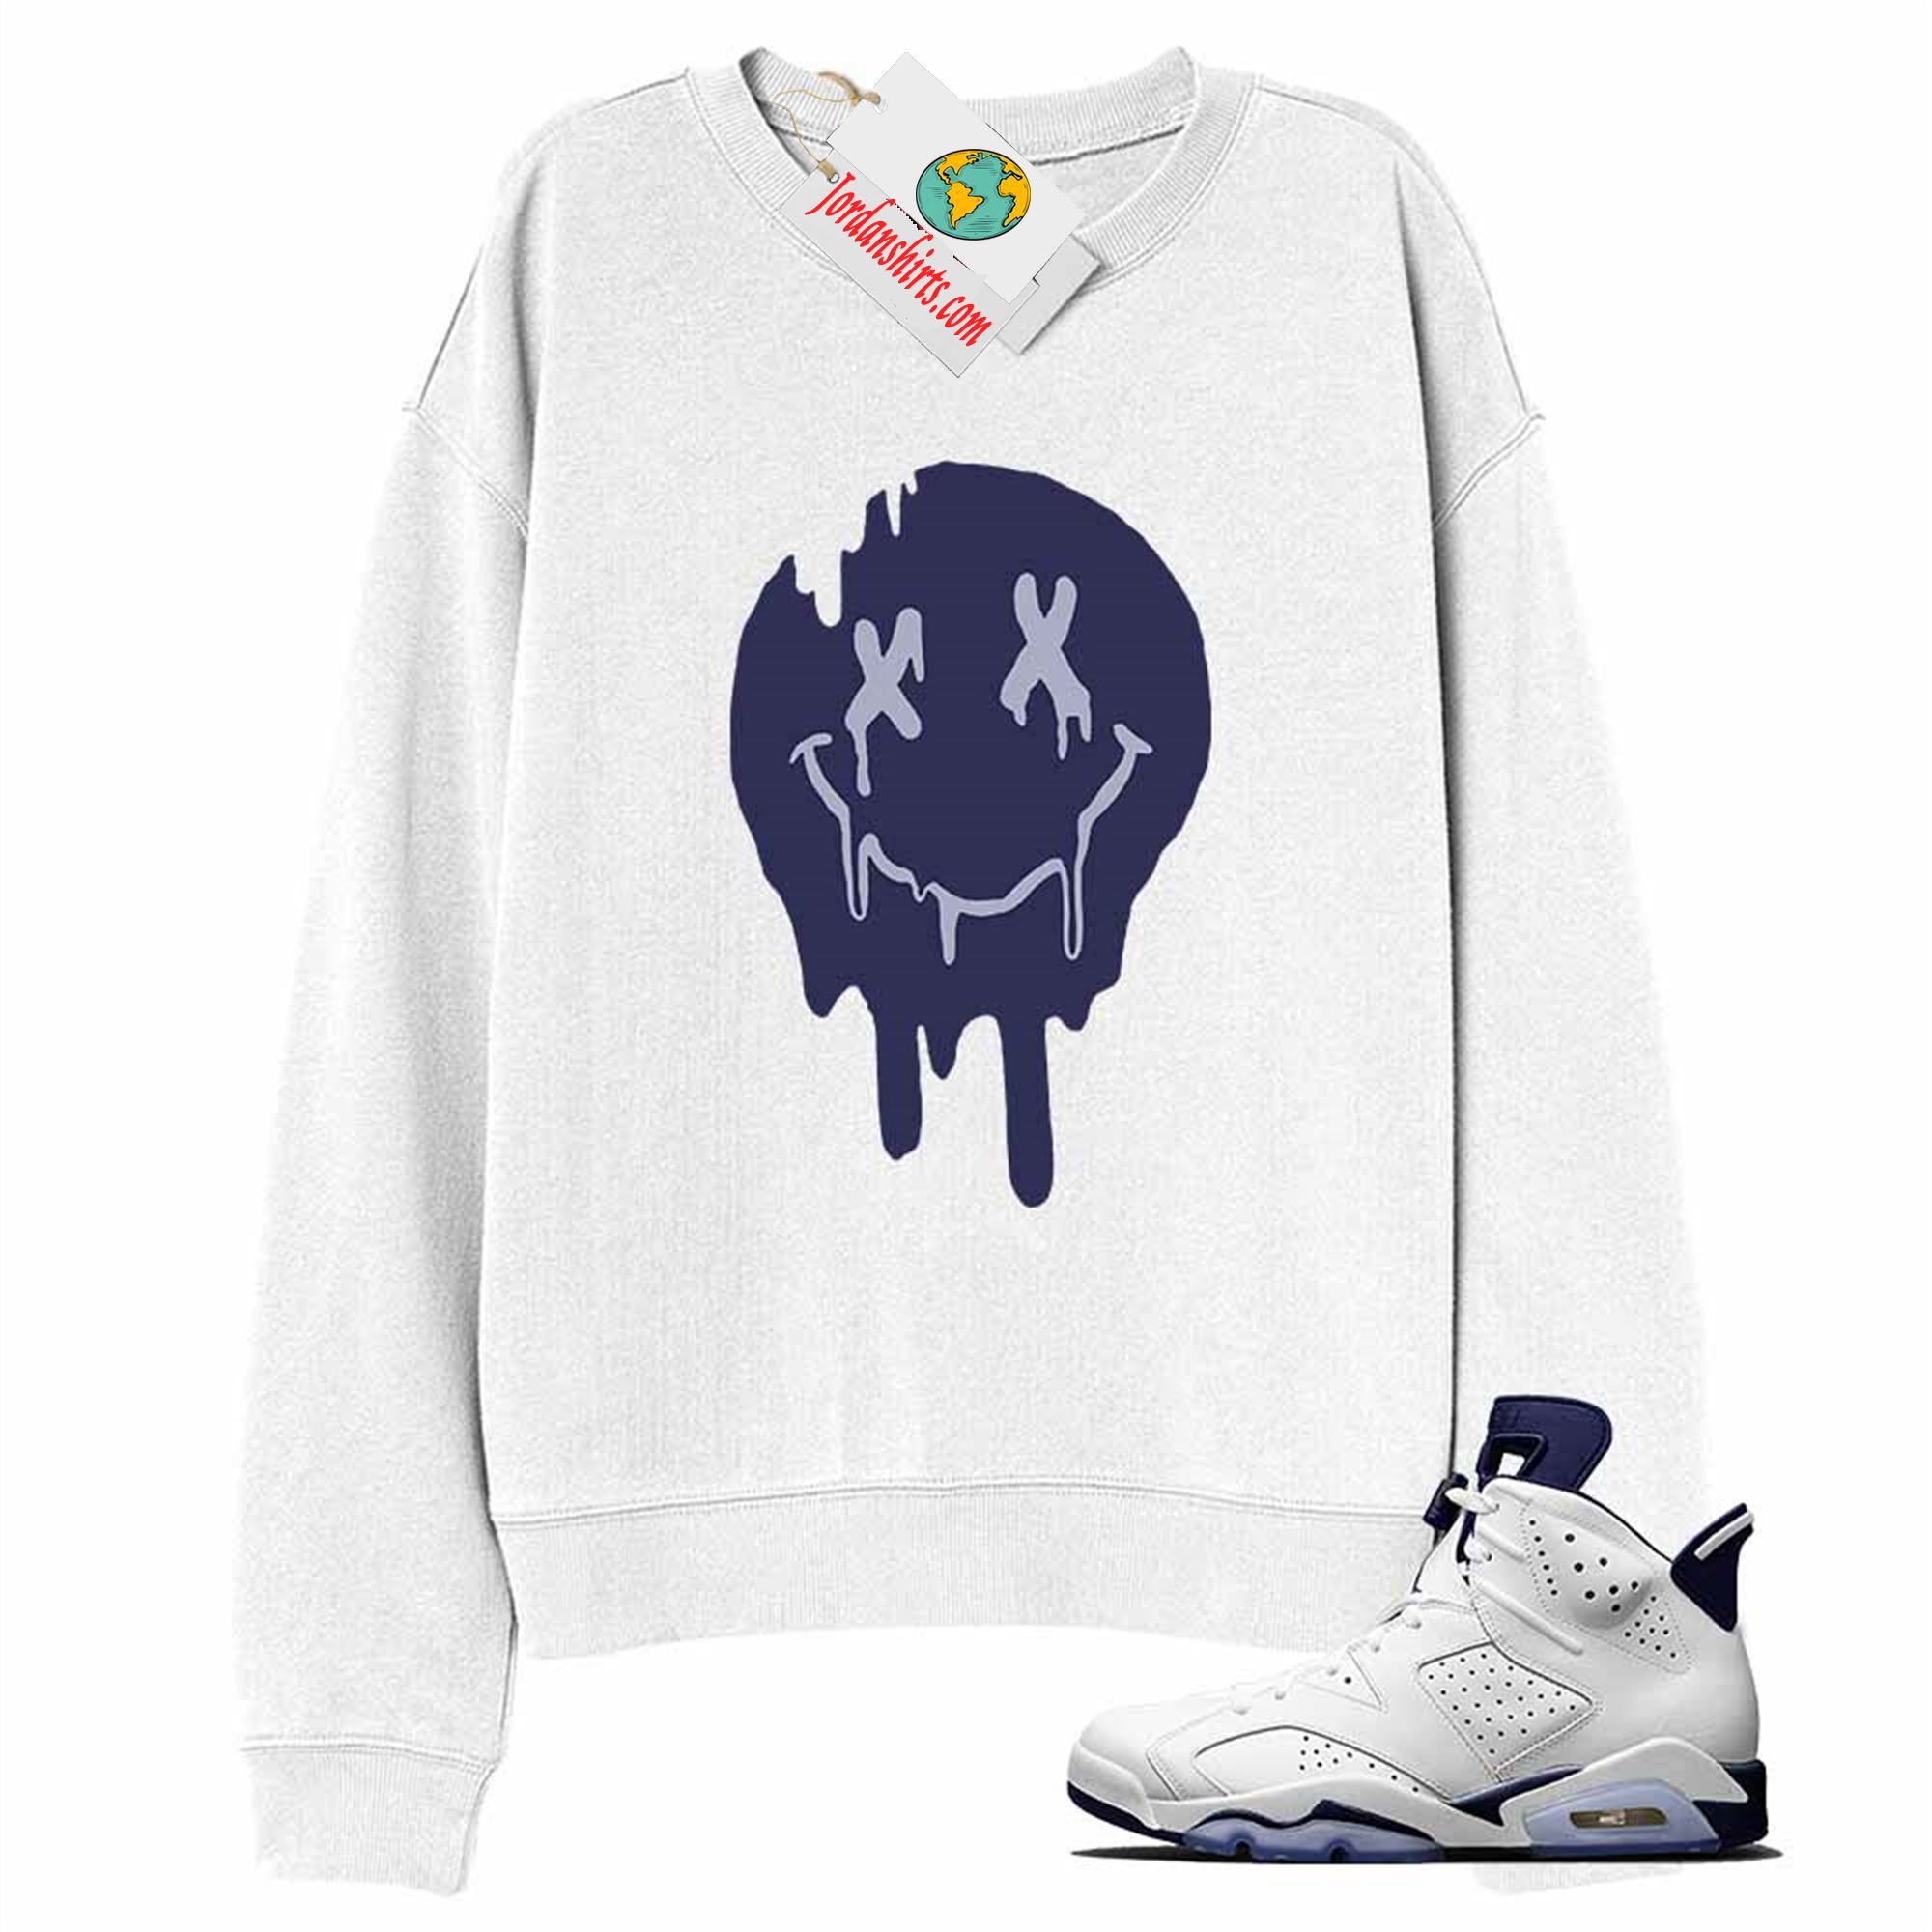 Jordan 6 Sweatshirt, Happy Face Dripping White Sweatshirt Air Jordan 6 Midnight Navy 6s Full Size Up To 5xl